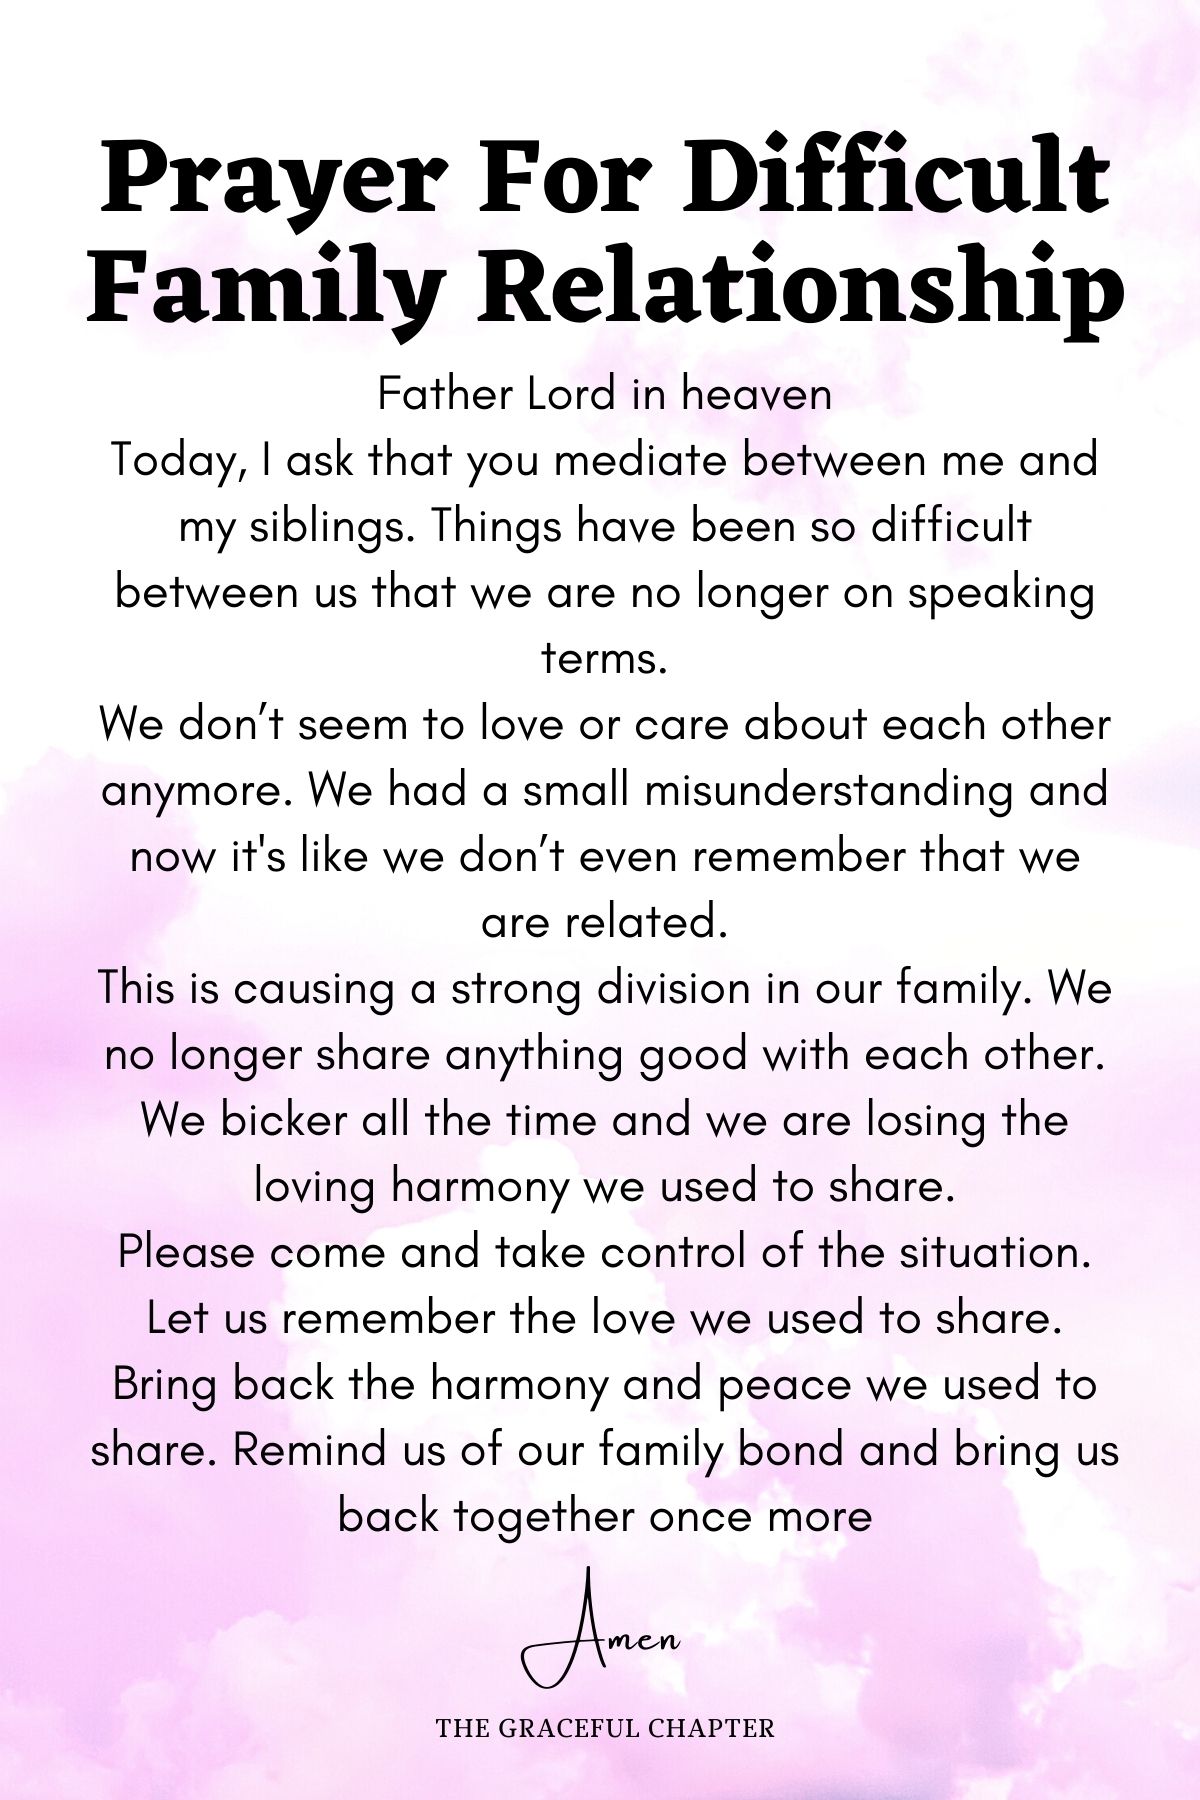 Prayer for difficult family relationship